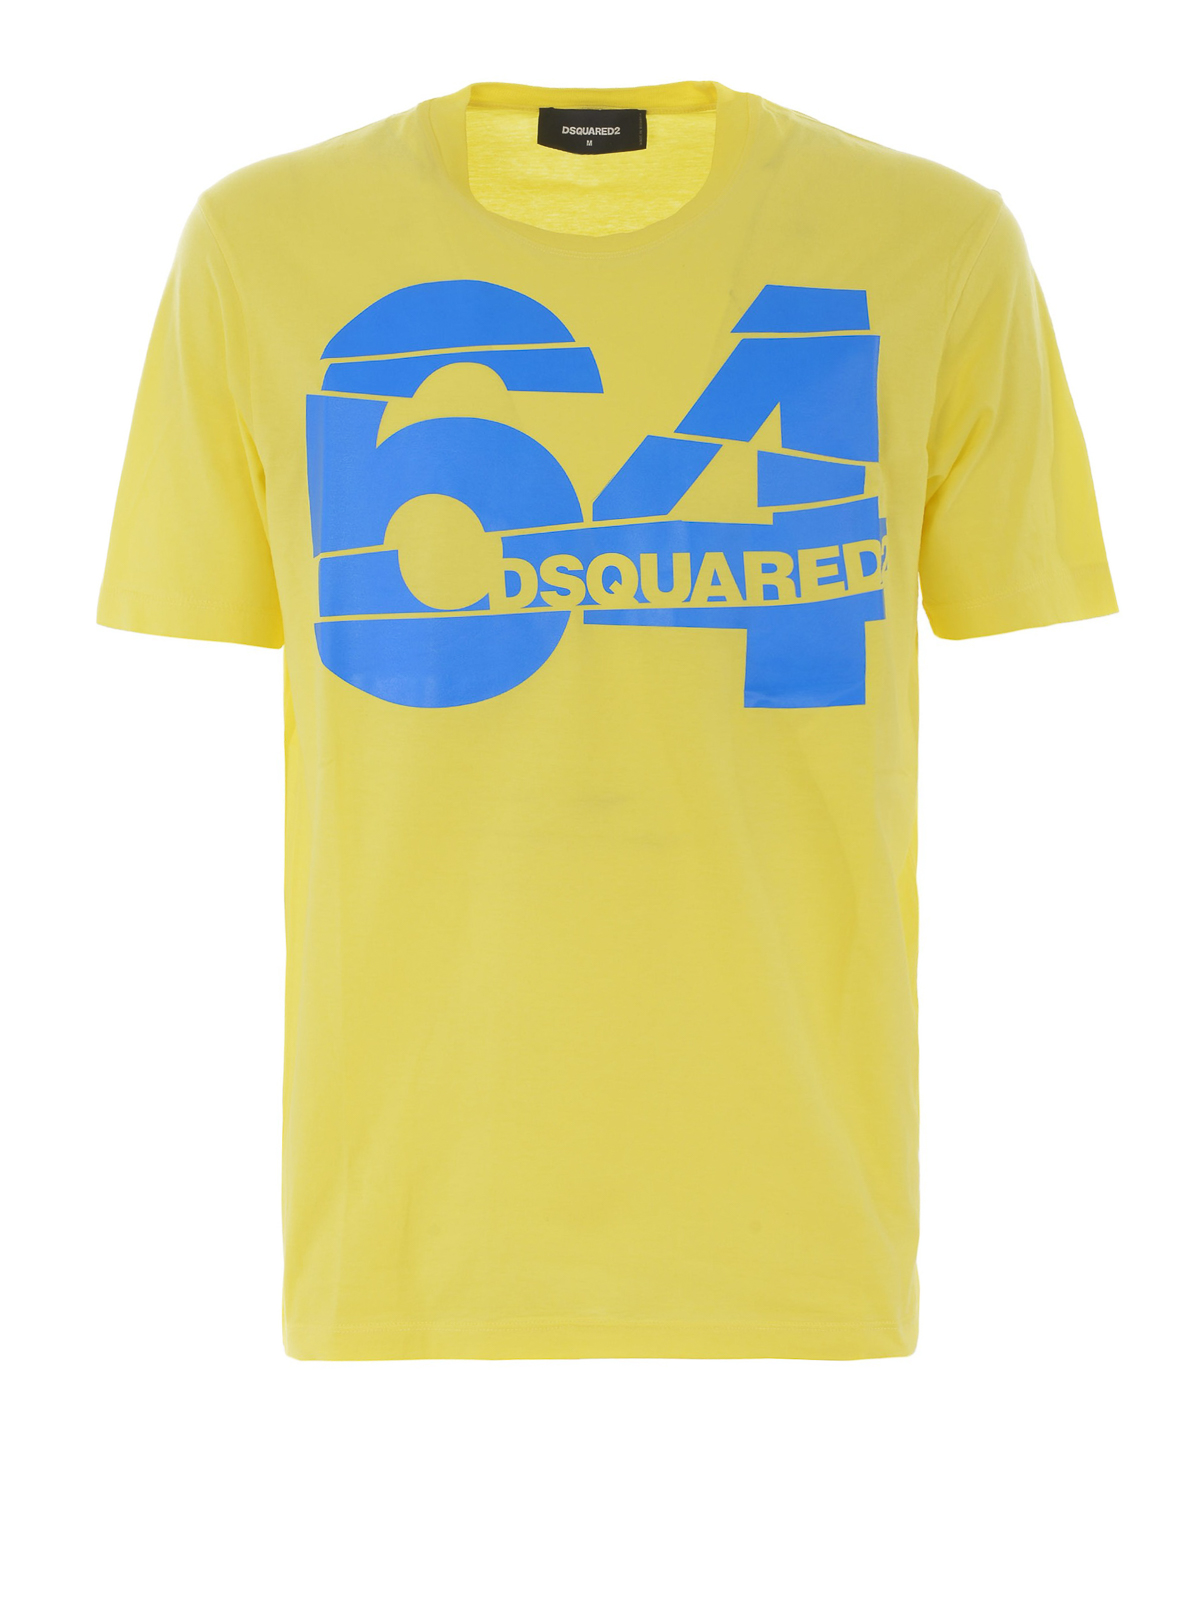 dsquared2 shirt yellow